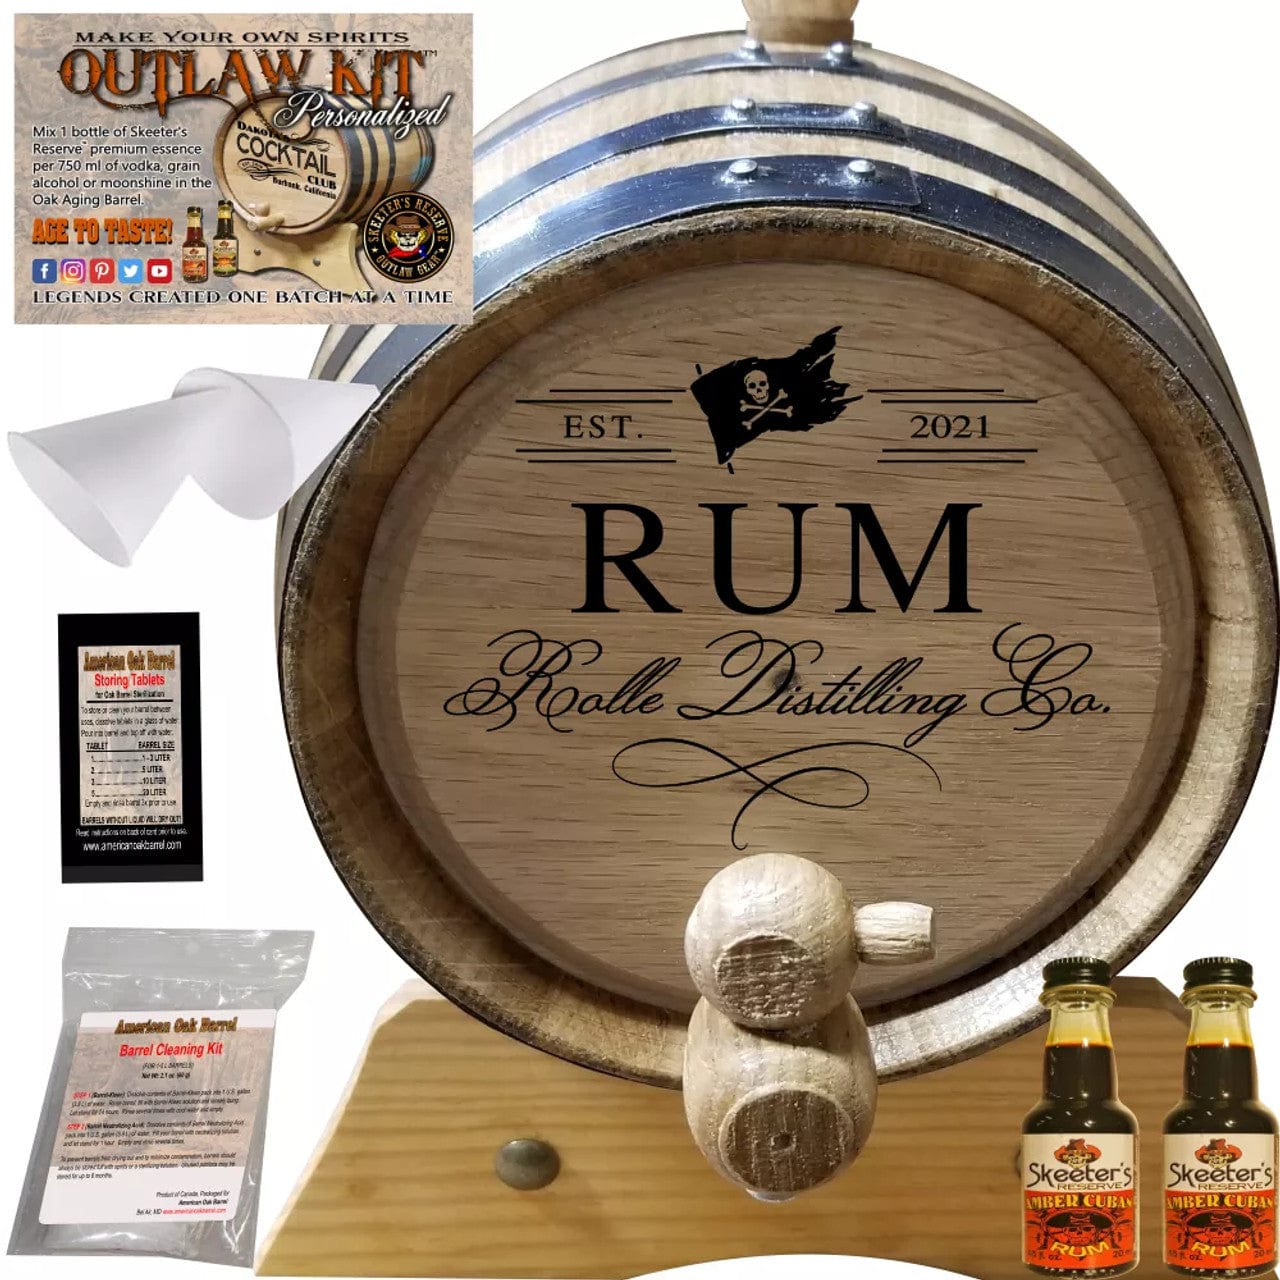 American Oak Barrel Outlaw Kits 1 Liter (.26 gallon) / Cherry Bourbon American Oak Barrel Personalized Outlaw Kit™ (400) Your Rum Distilling Co. - Create Your Own Spirits